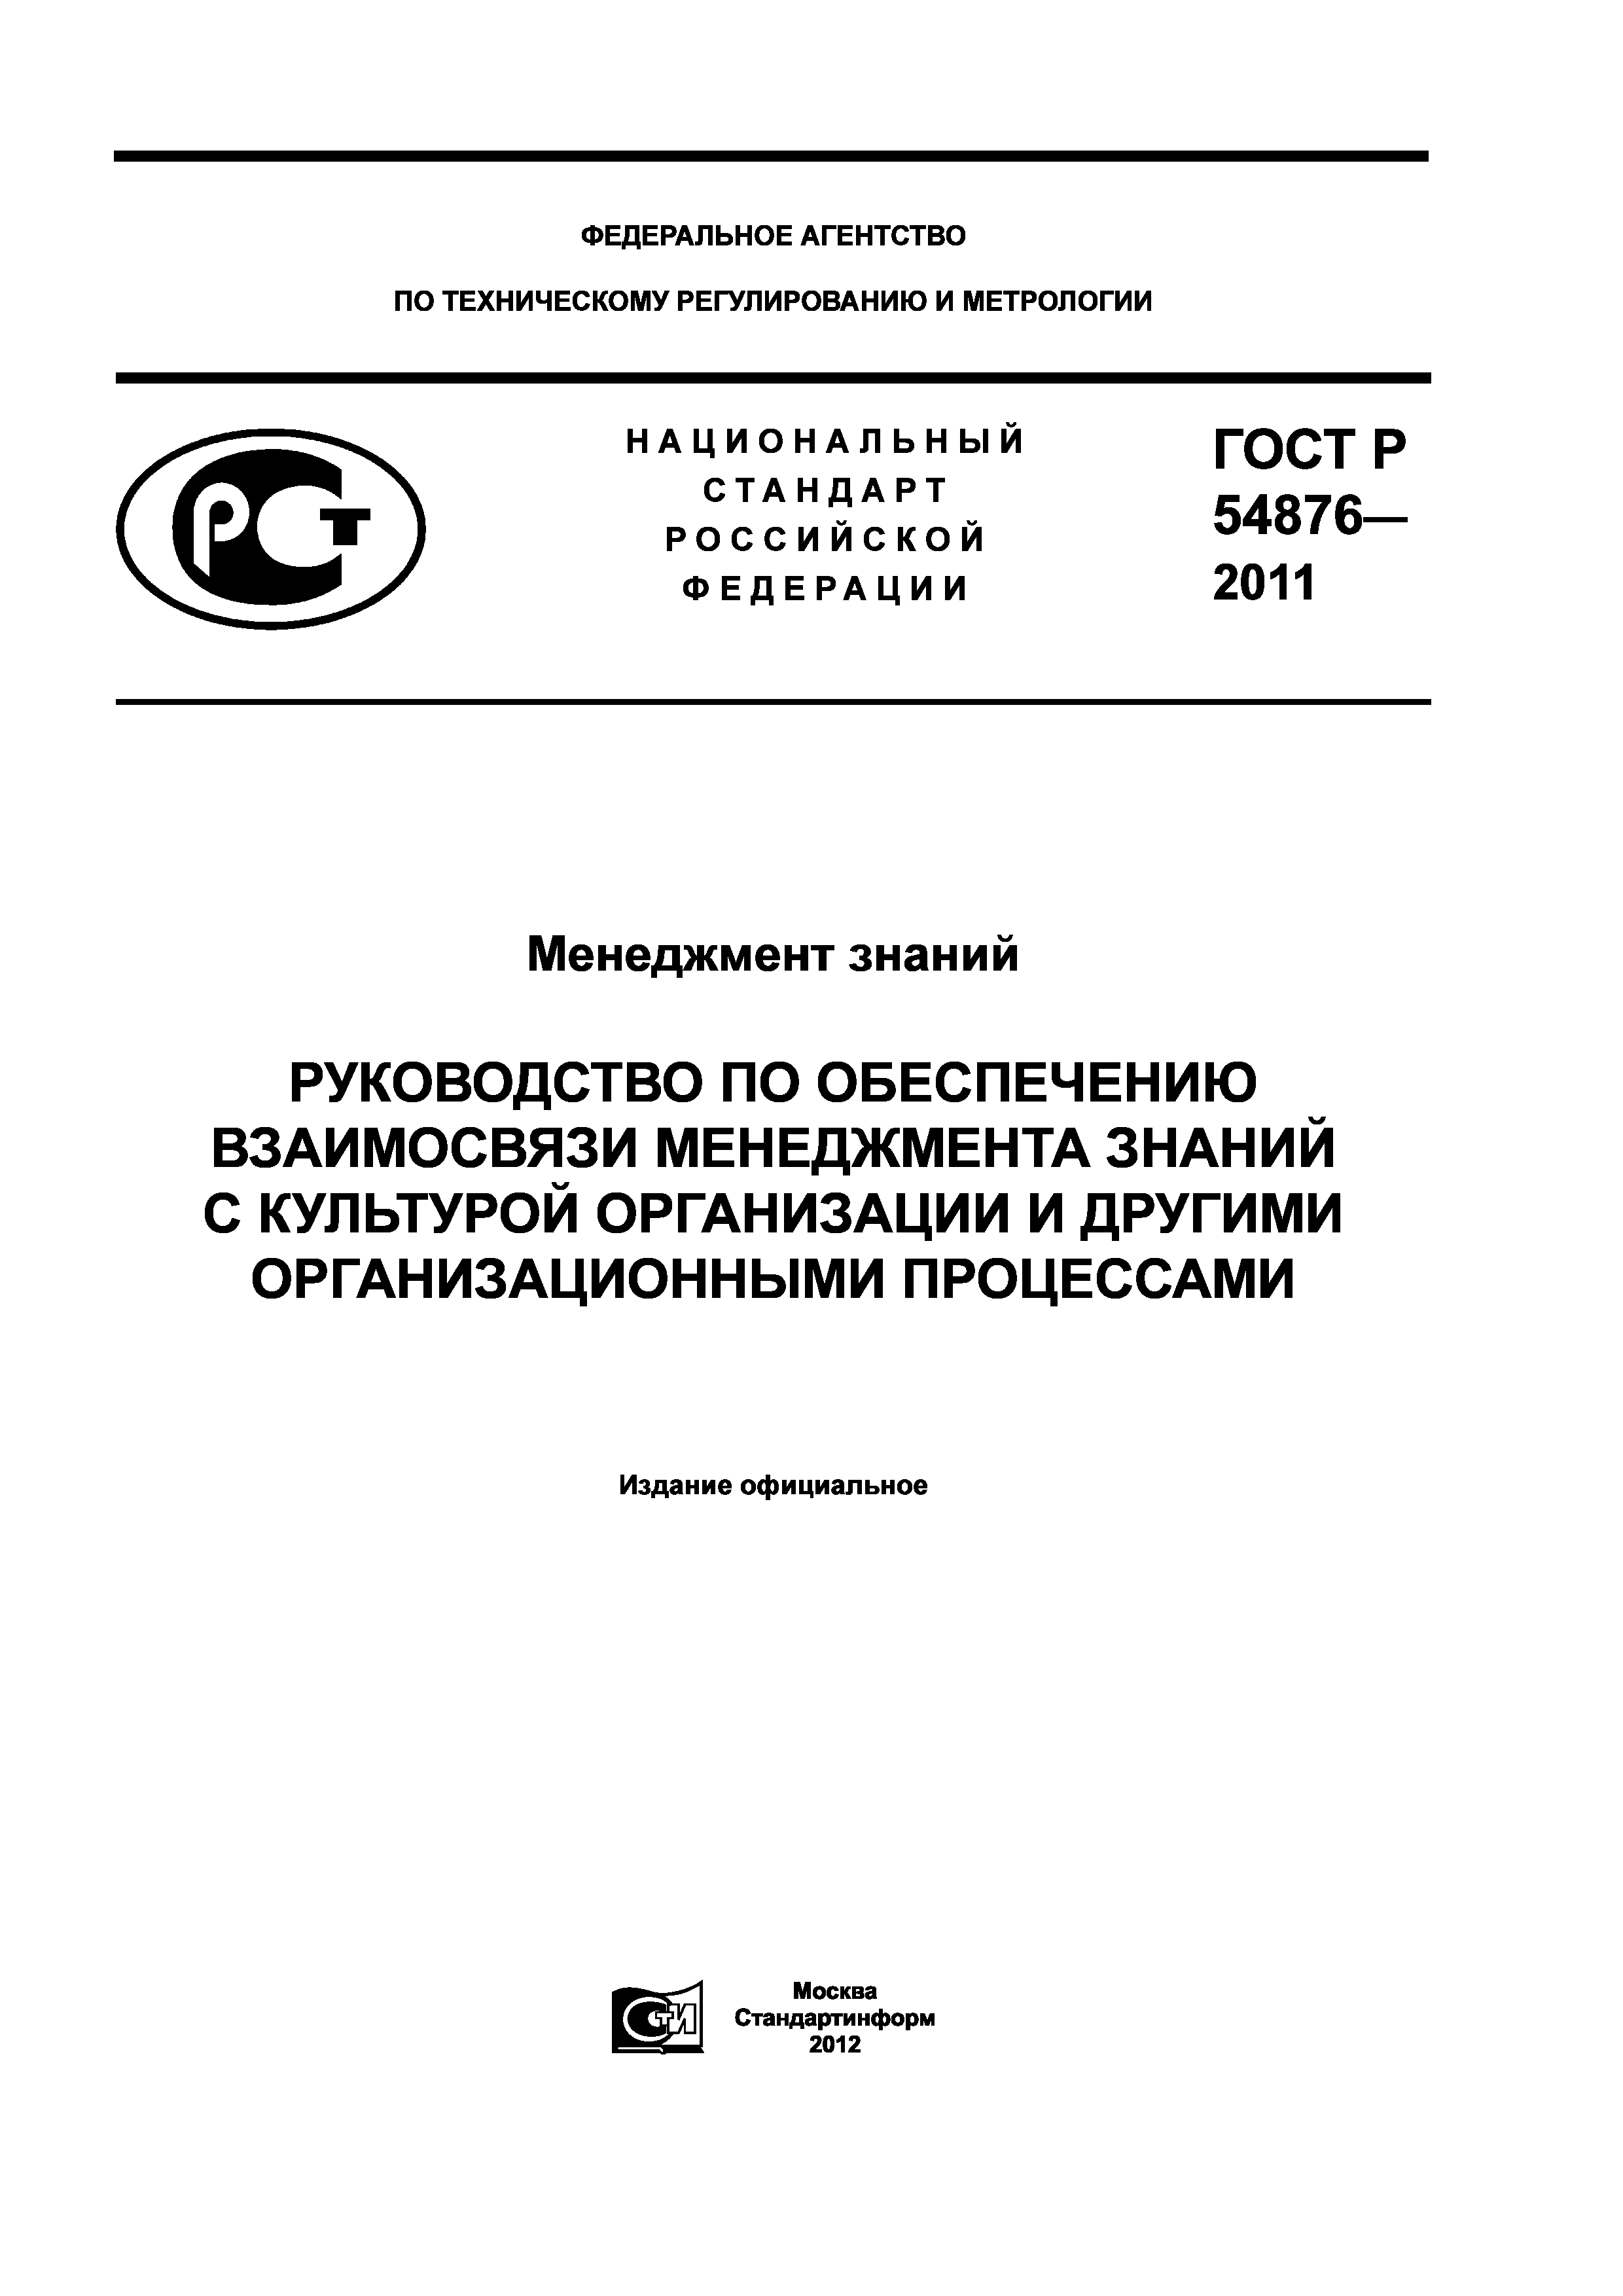 ГОСТ Р 54876-2011